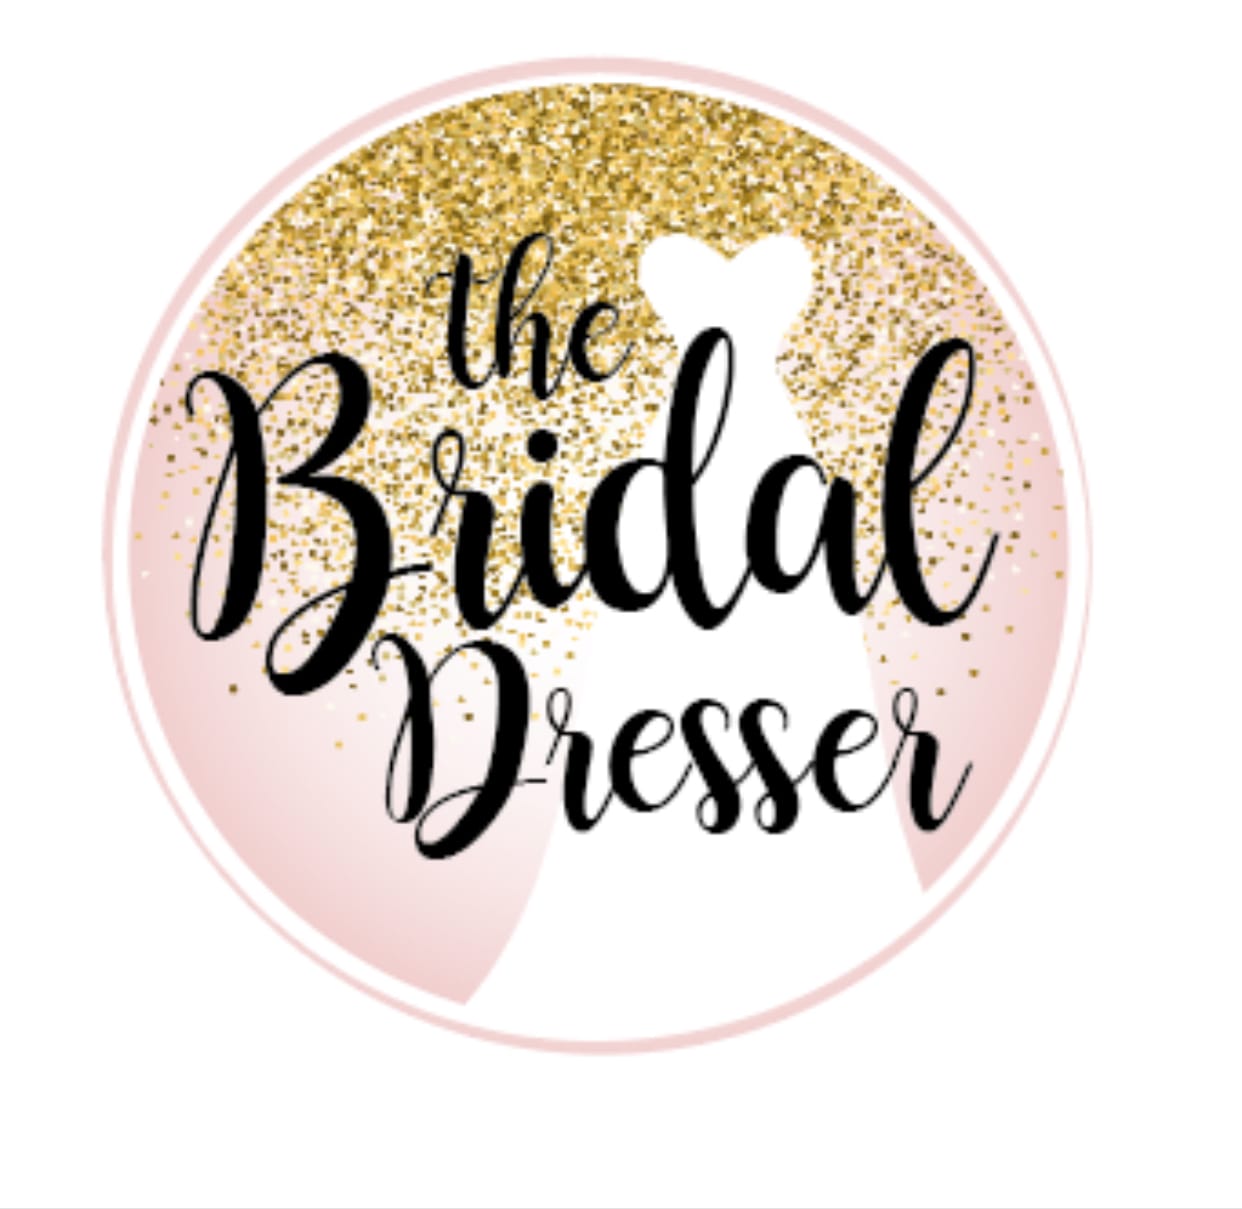 The Bridal Dresser